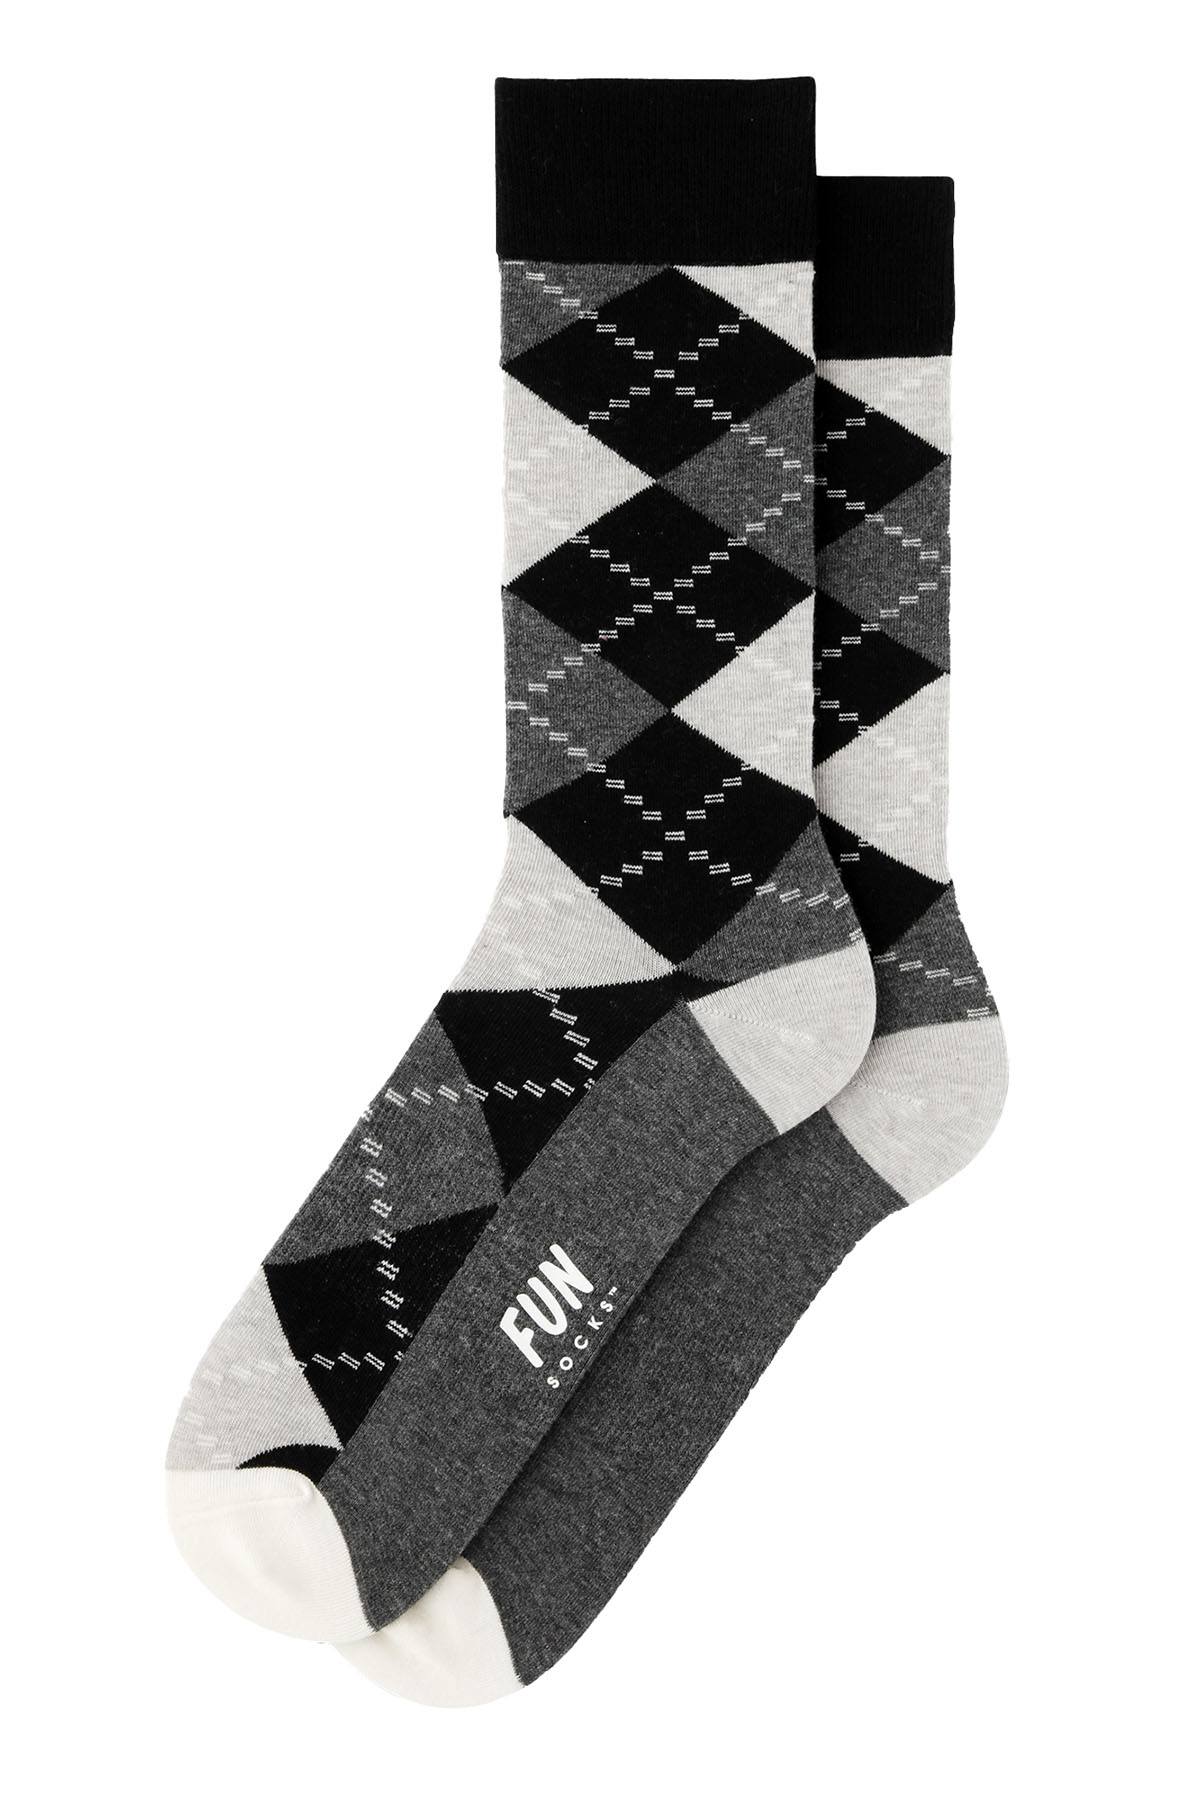 Fun Socks Black/White/Grey Argyle Crew Socks